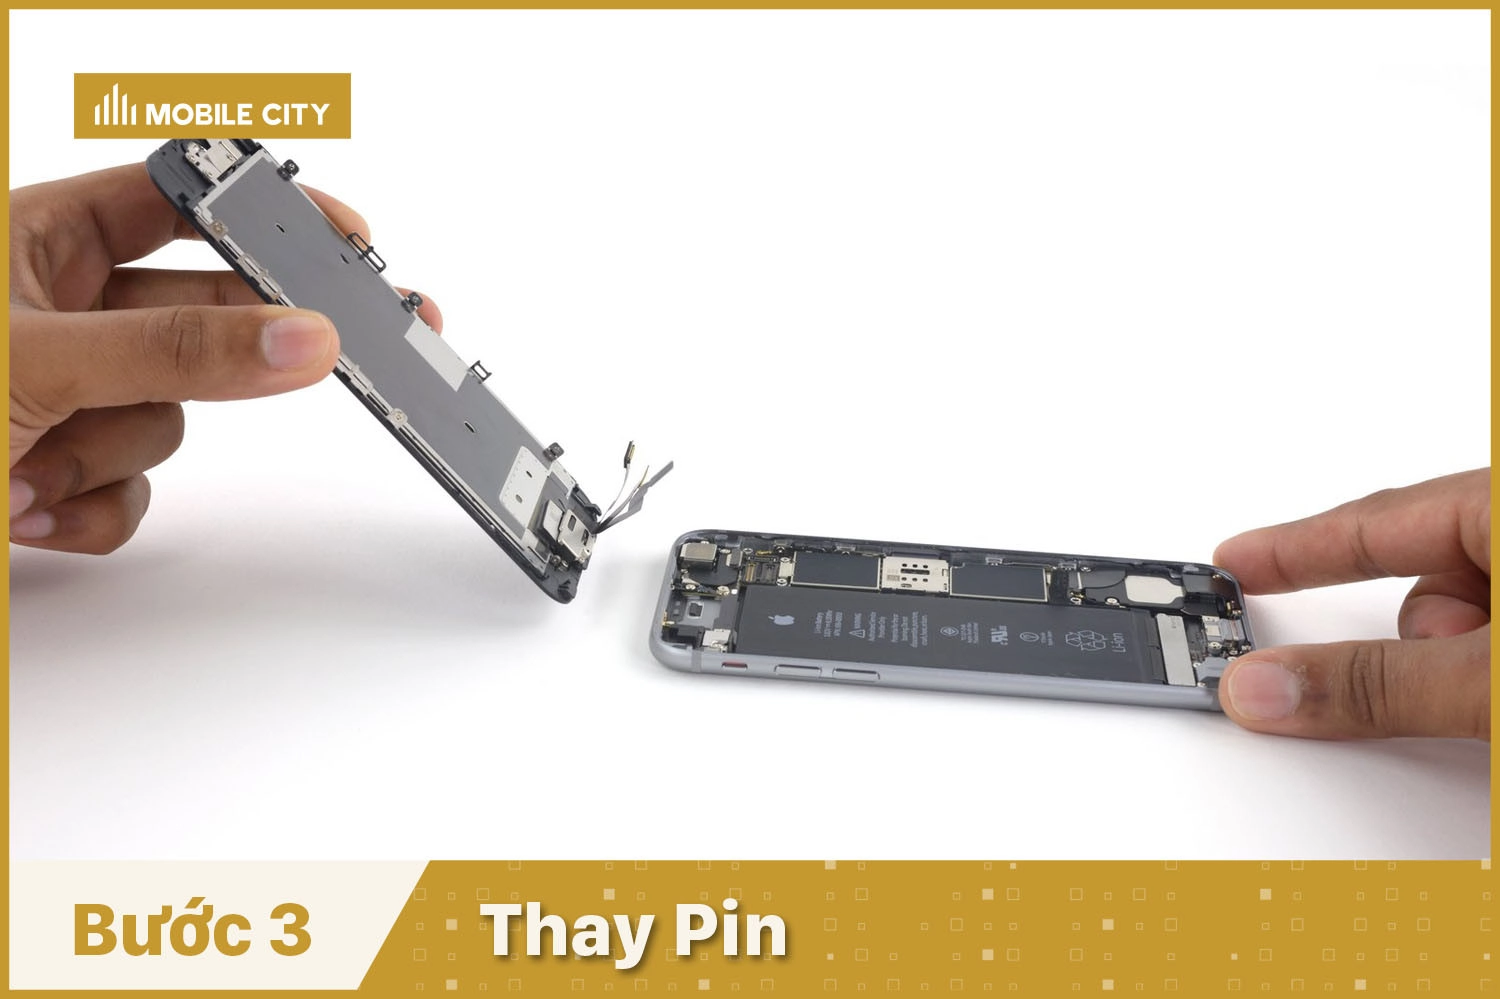 Thay Pin cho iPhone 6S